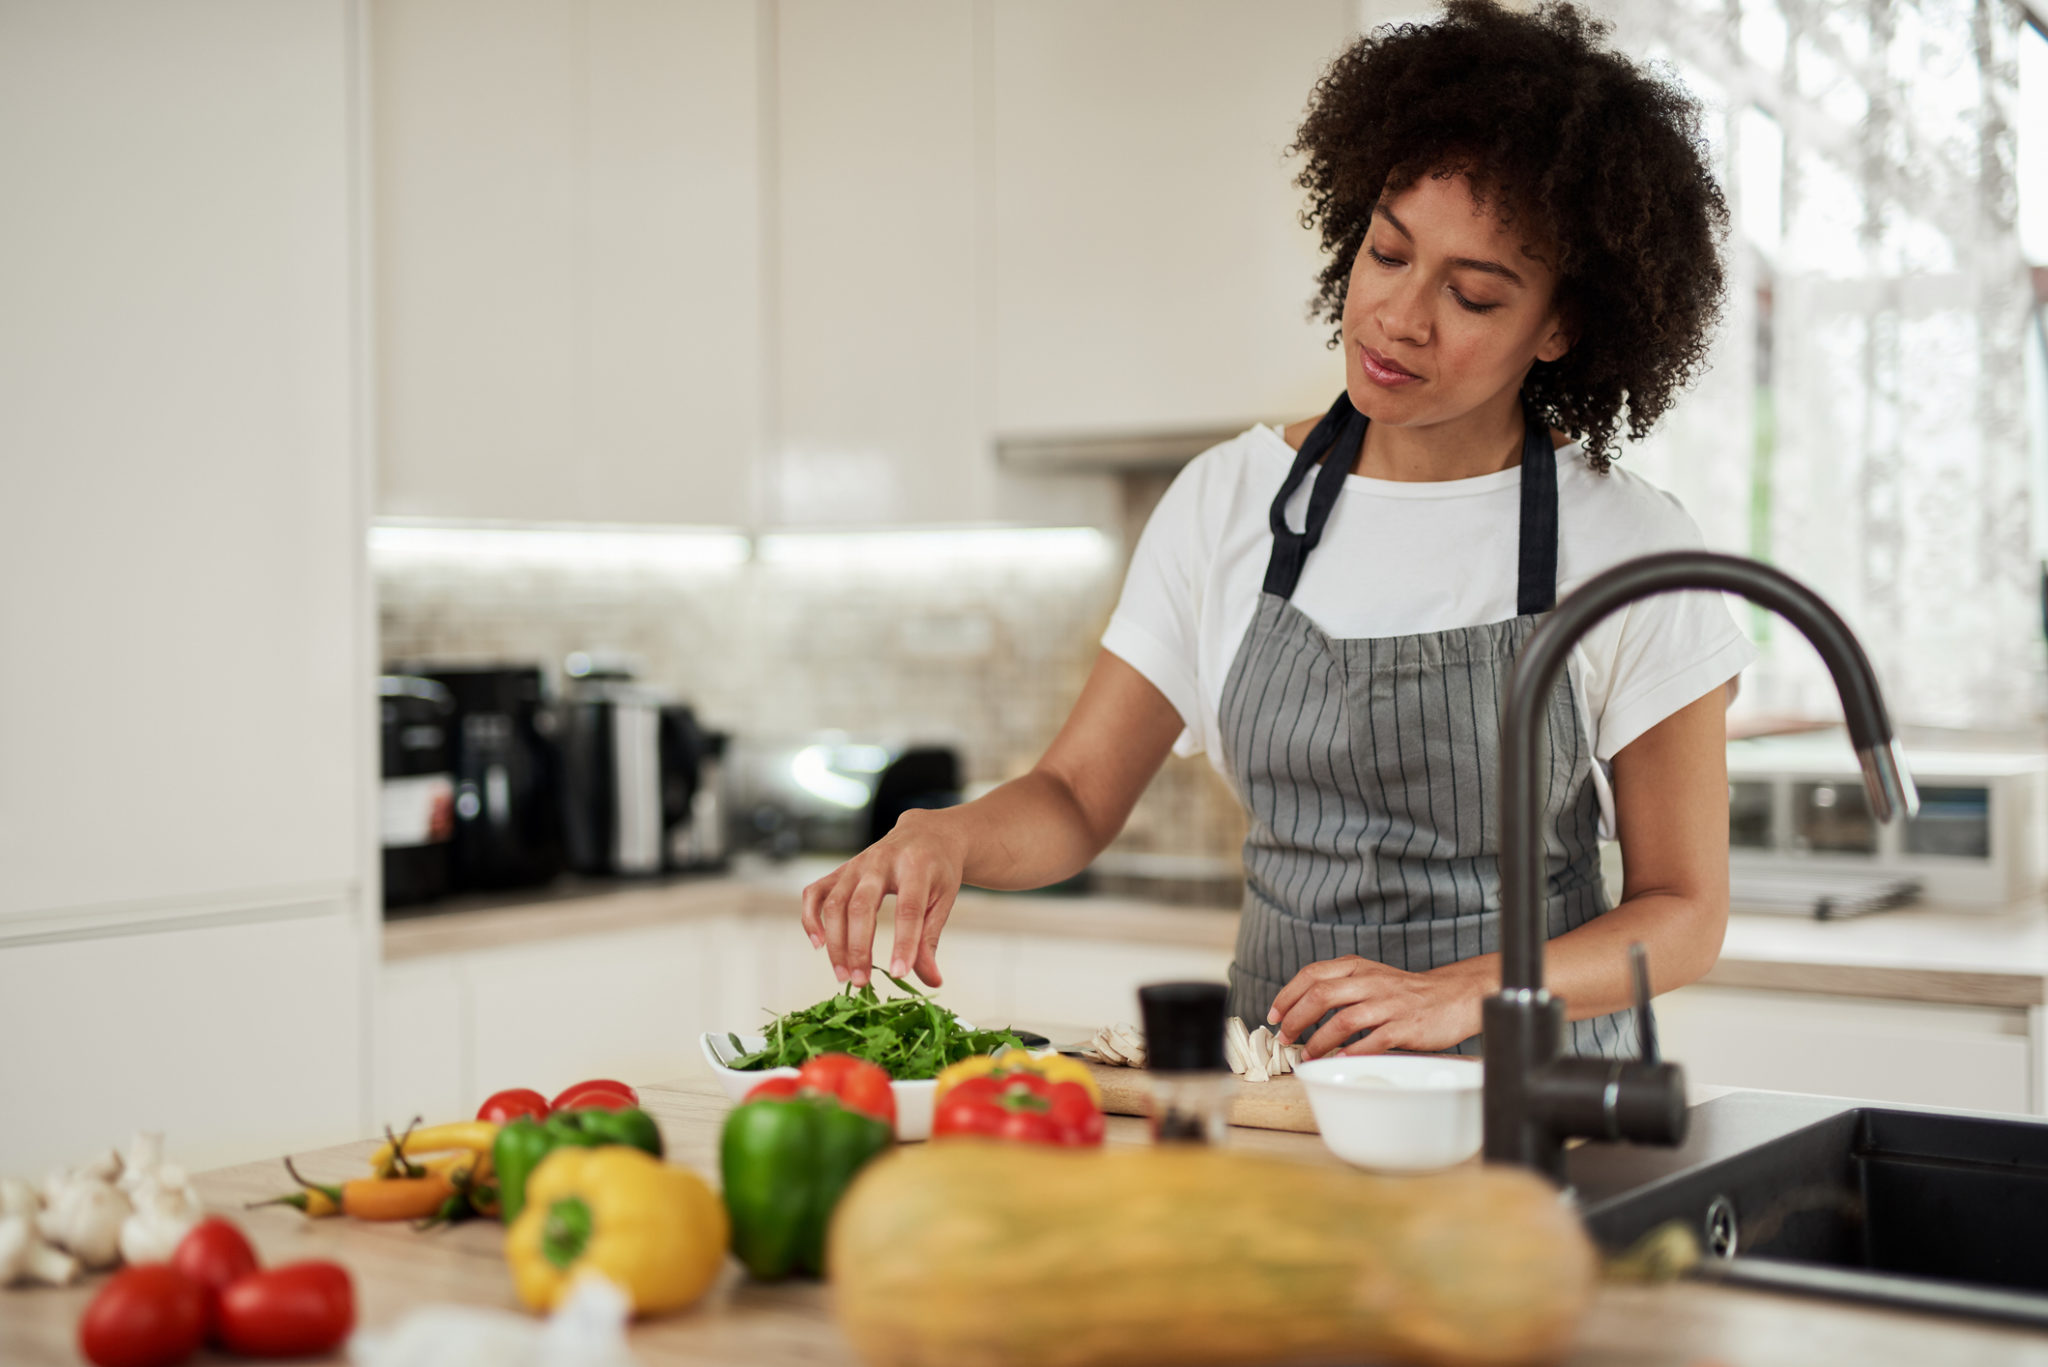 Mixed race woman preparing dinner. - Vegan Action